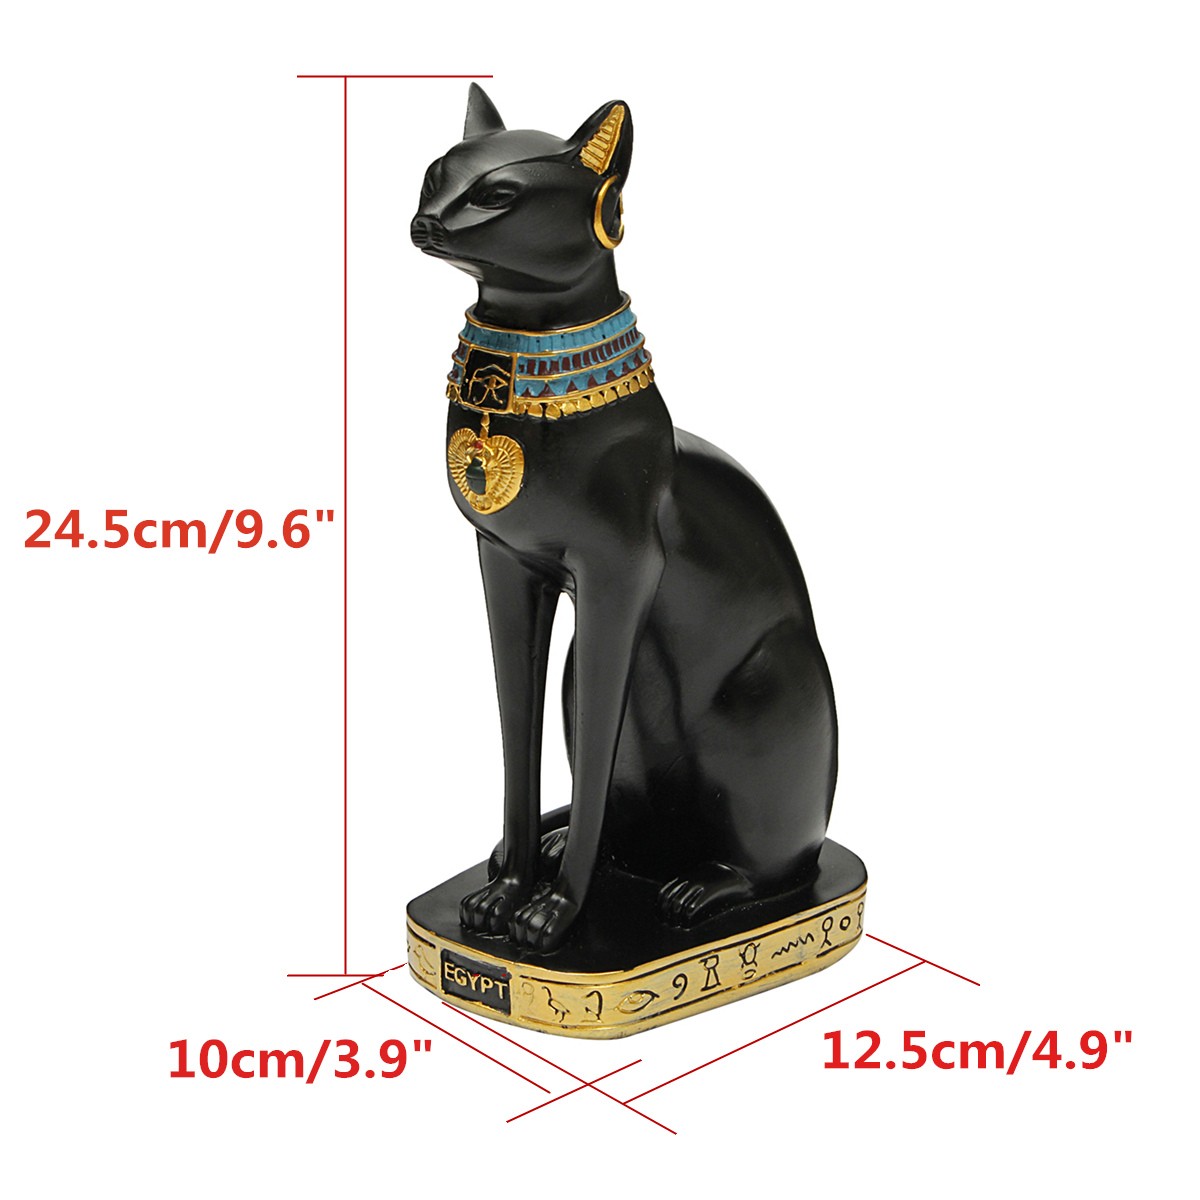 96inch-Resin-Vintage-Egyptian-Bastet-Goddess-Figurine-Black-Cat-Pharaoh-Statue-Epoxy-1304890-2